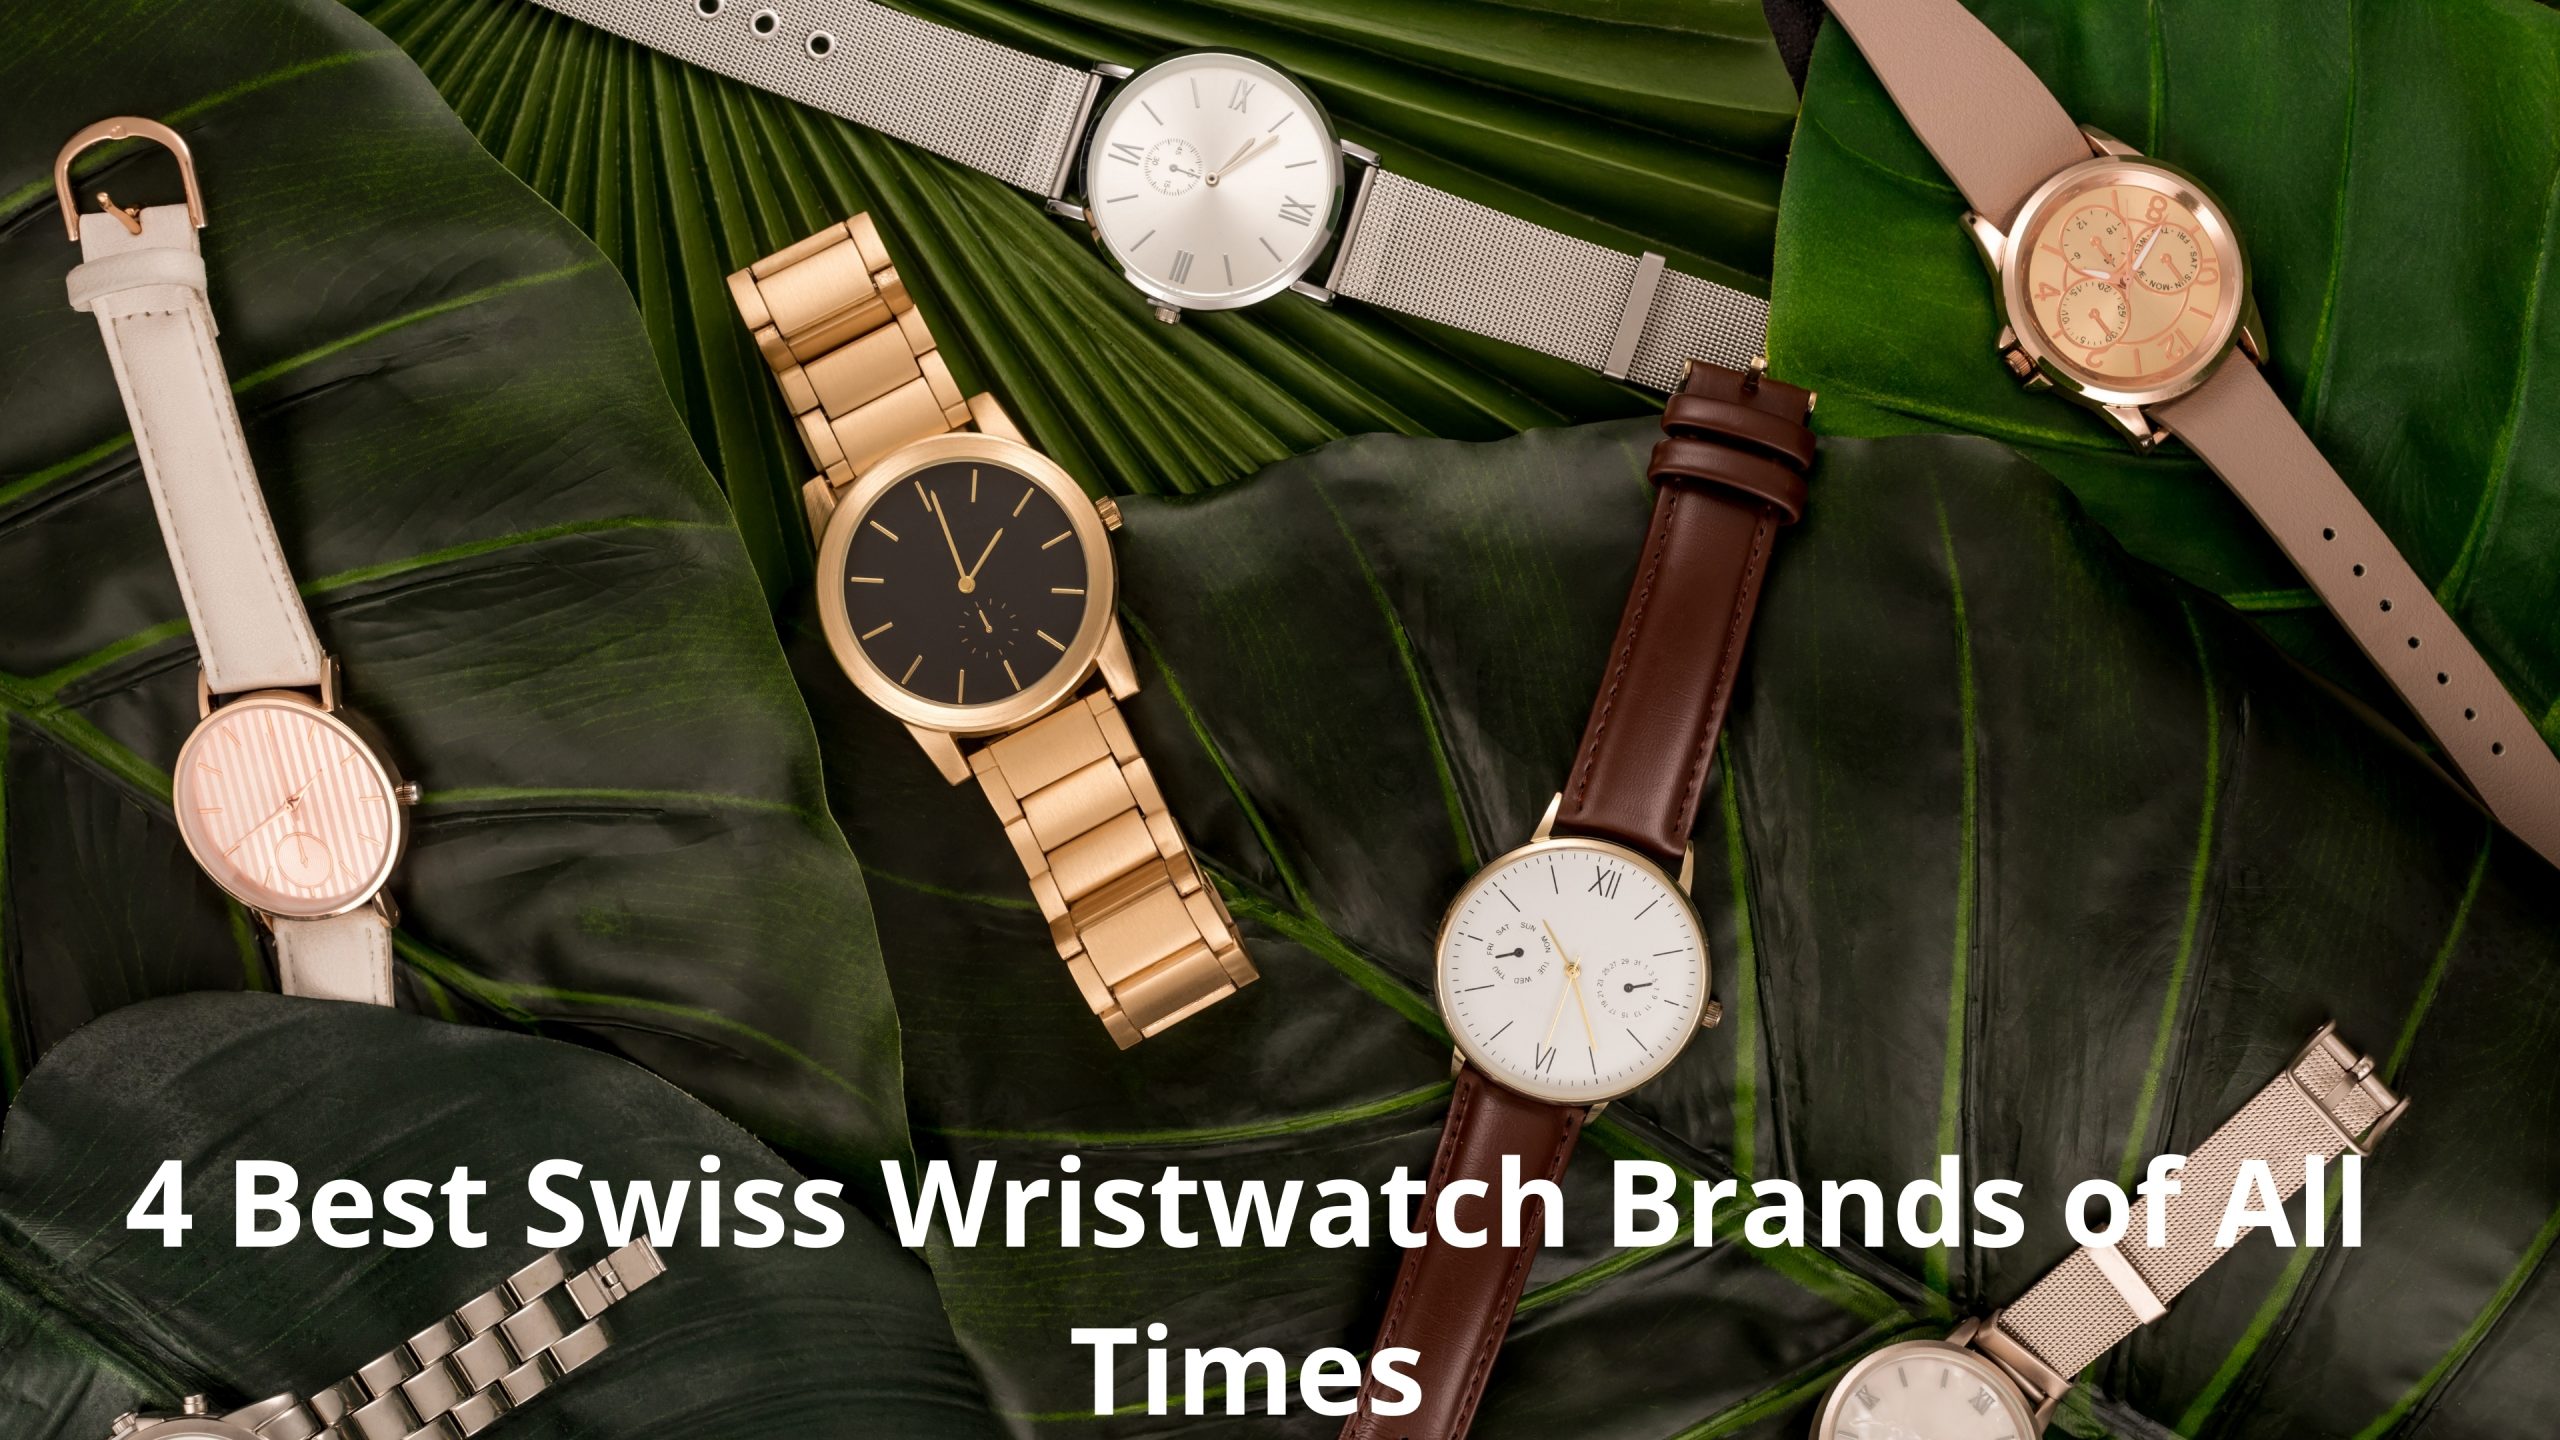 4 Best Swiss Wristwatch Brands of All Times